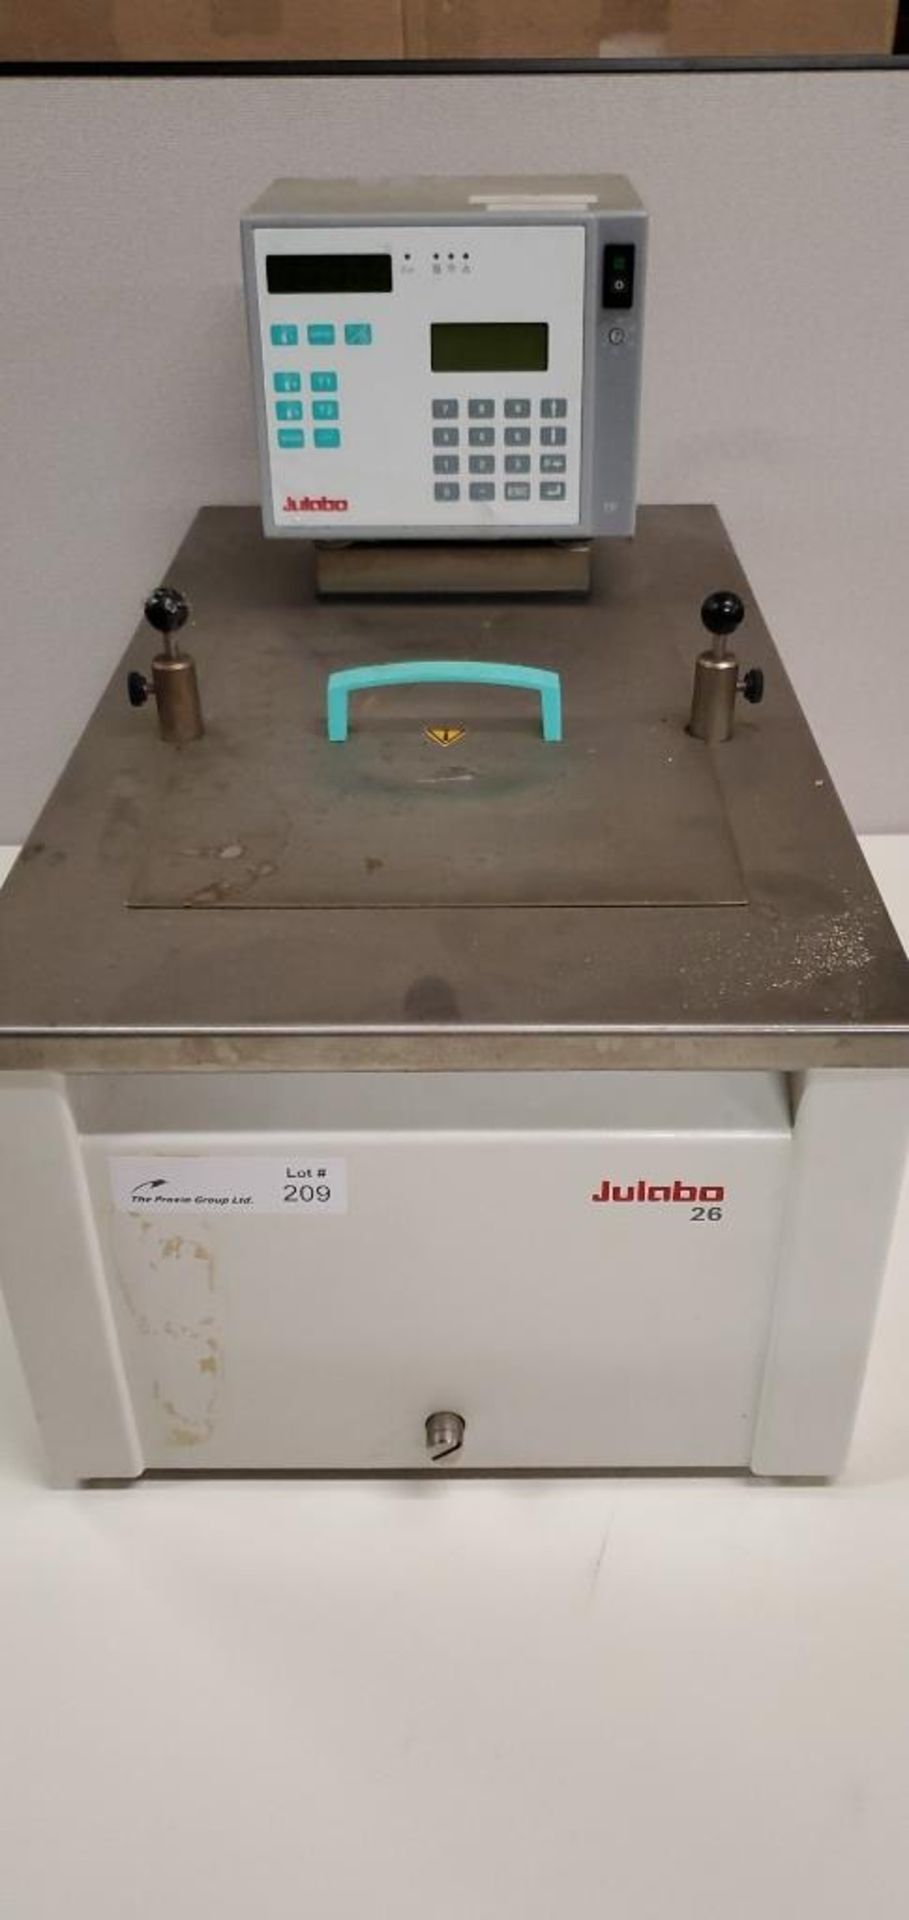 Julabo Model 26 Benchtop Recirculating Water Bath